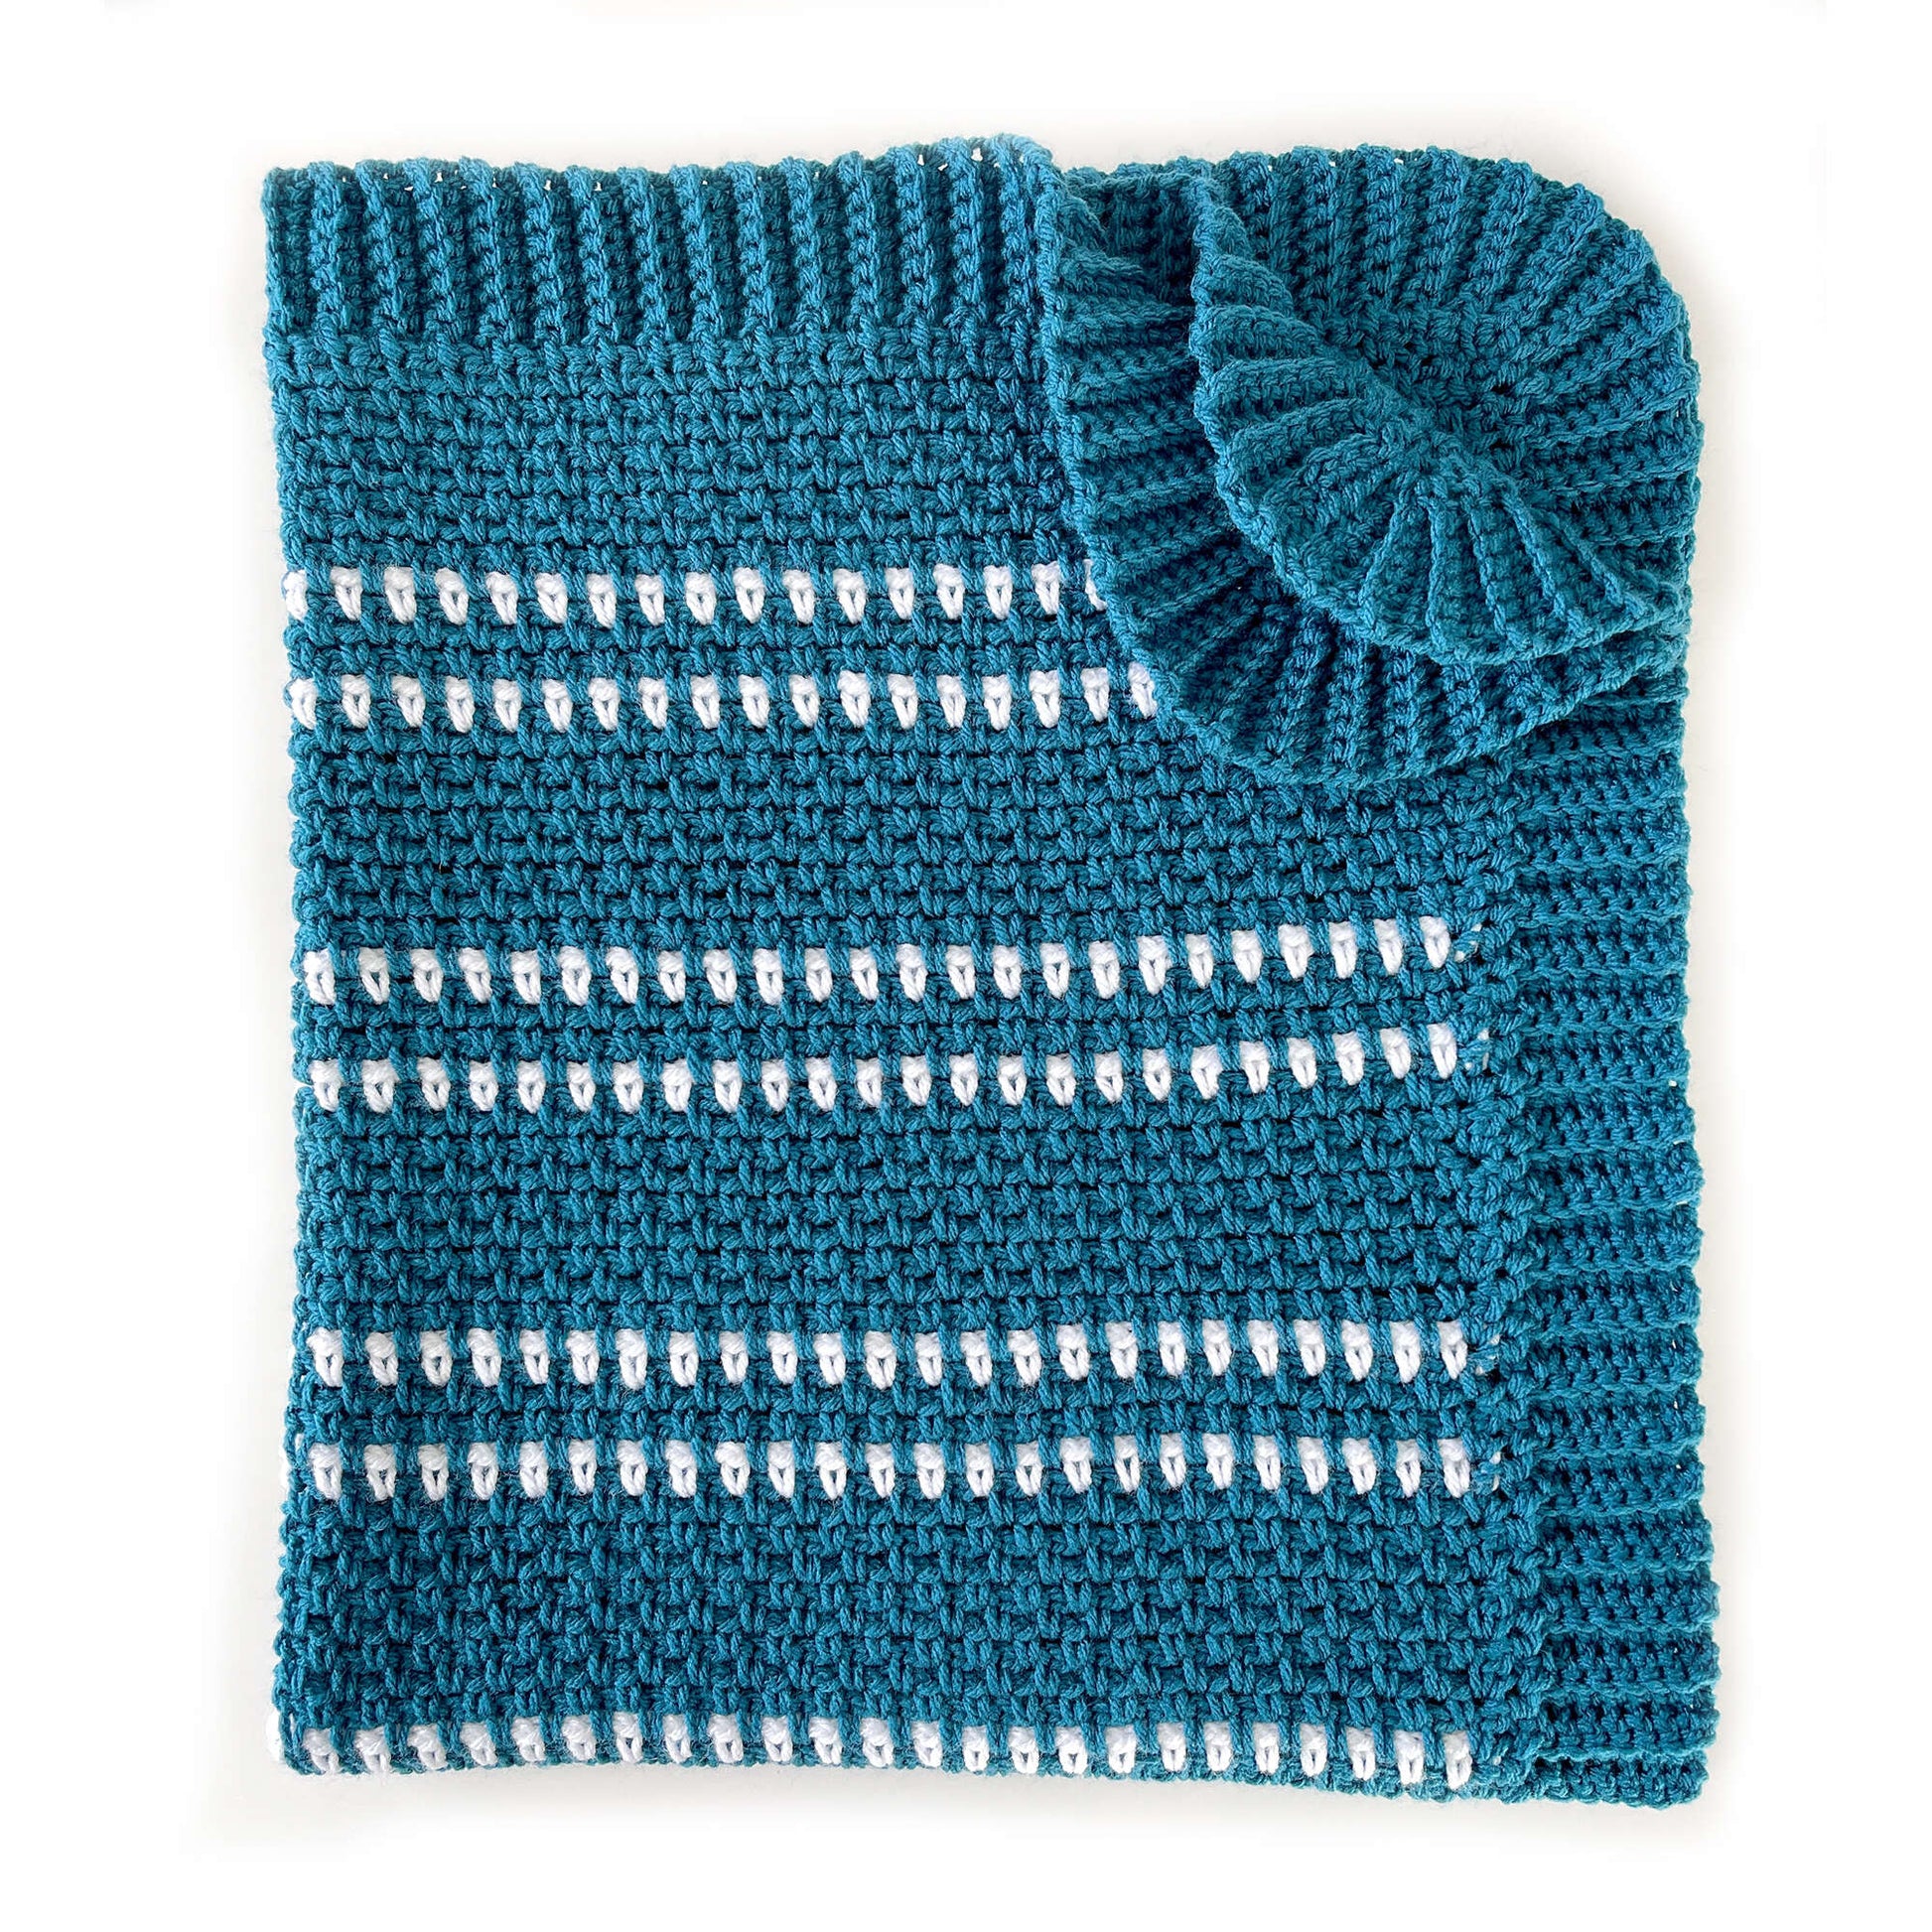 15 Easy & Free Crochet Baby Blanket Patterns